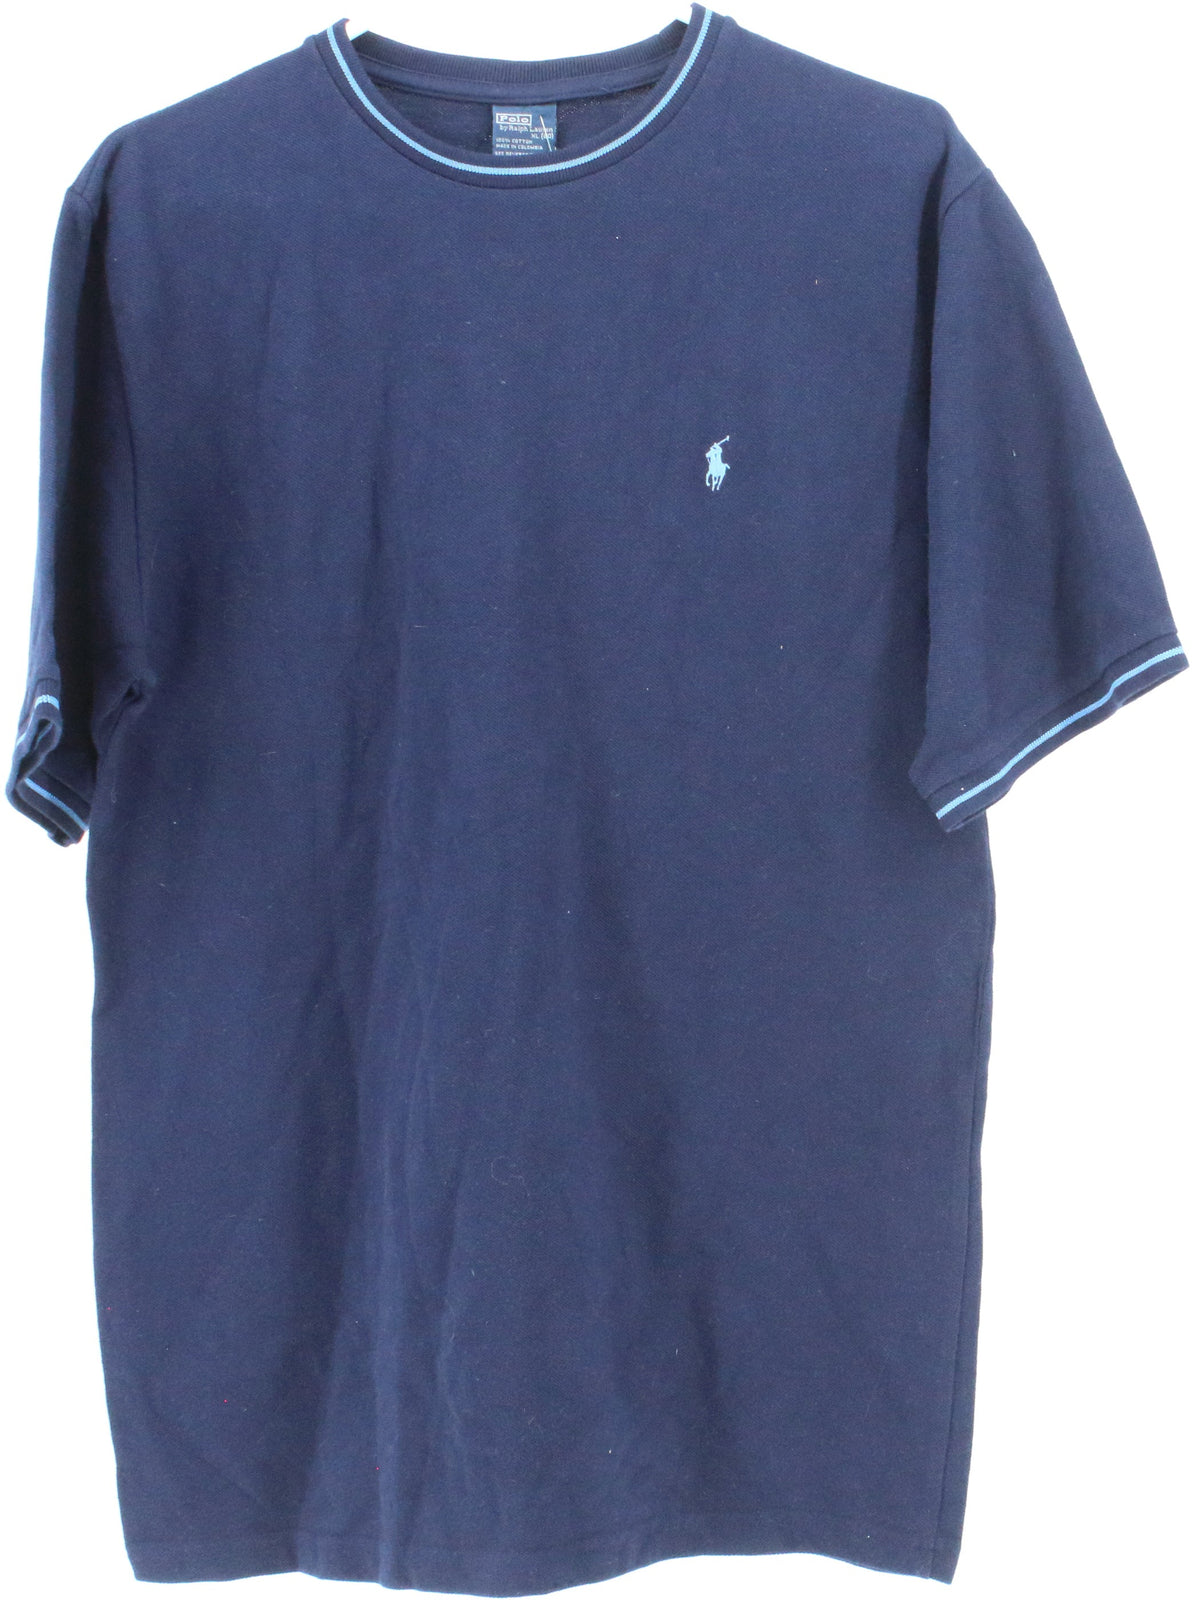 Polo by Ralph Lauren Navy Blue With Light Blue Details T-Shirt